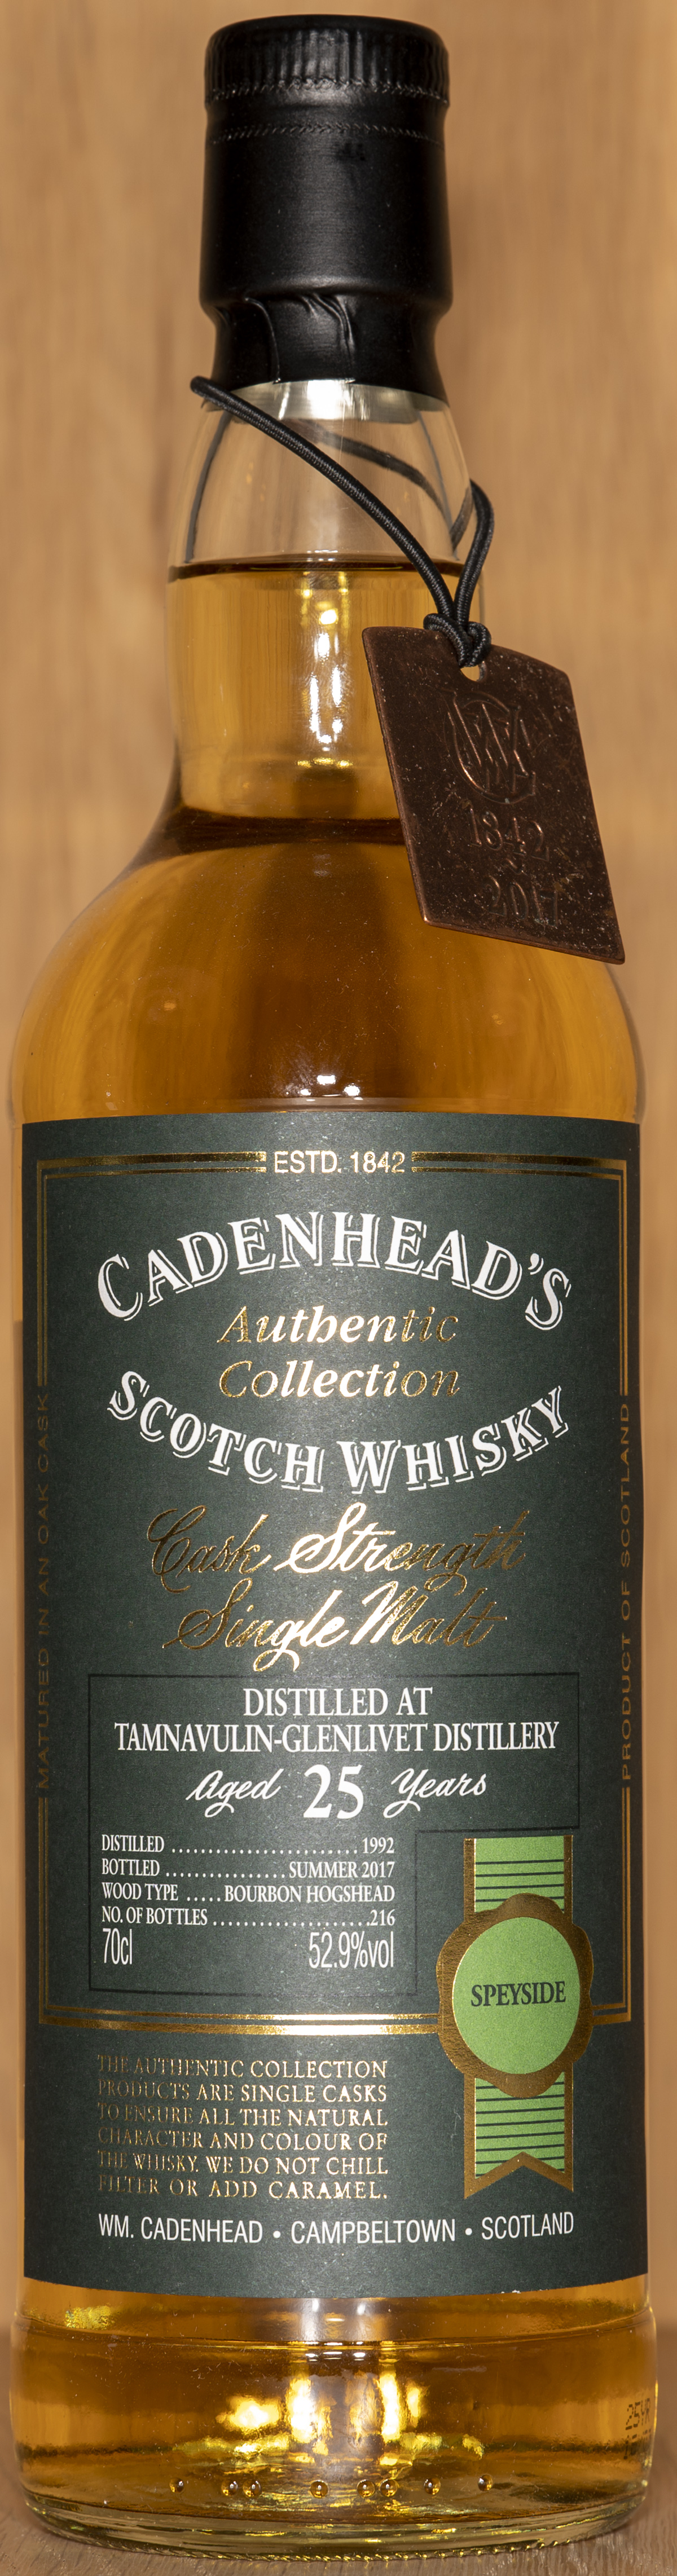 Billede: DSC_5024 - Cadenheads Authentic Collection Tamnavulin 25 - bottle front.jpg